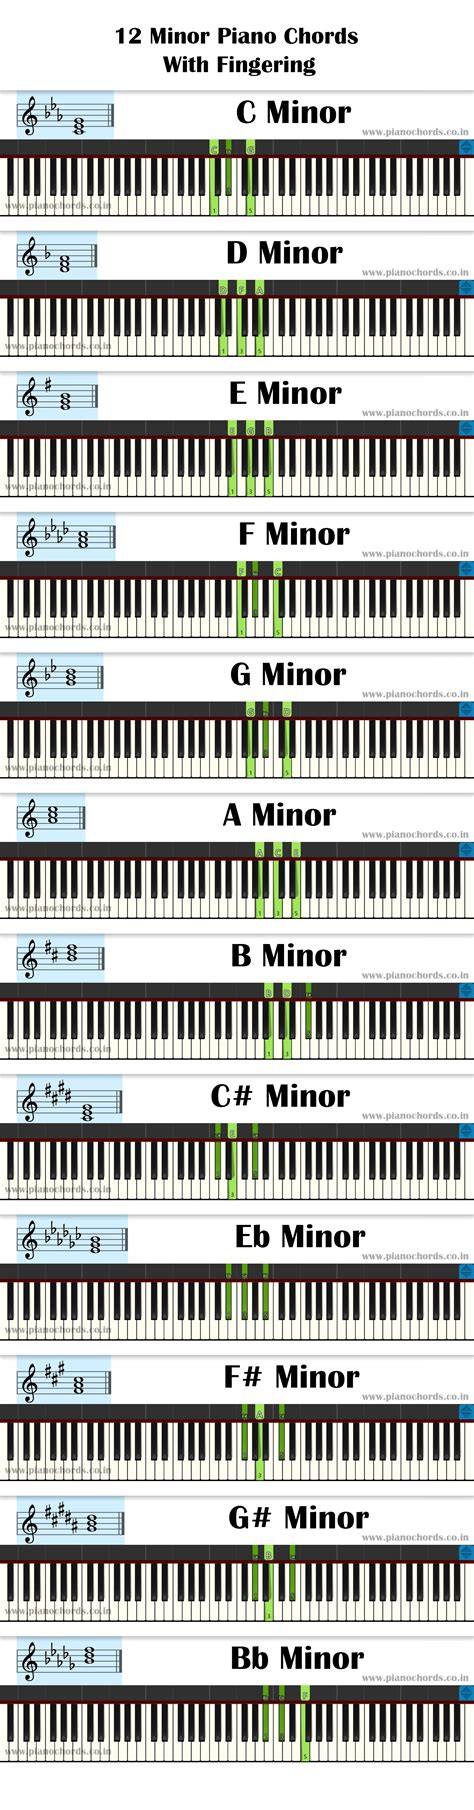 Chord 10 88 Key Piano Chord Chart Poster Piano Fingering Guide Diagram